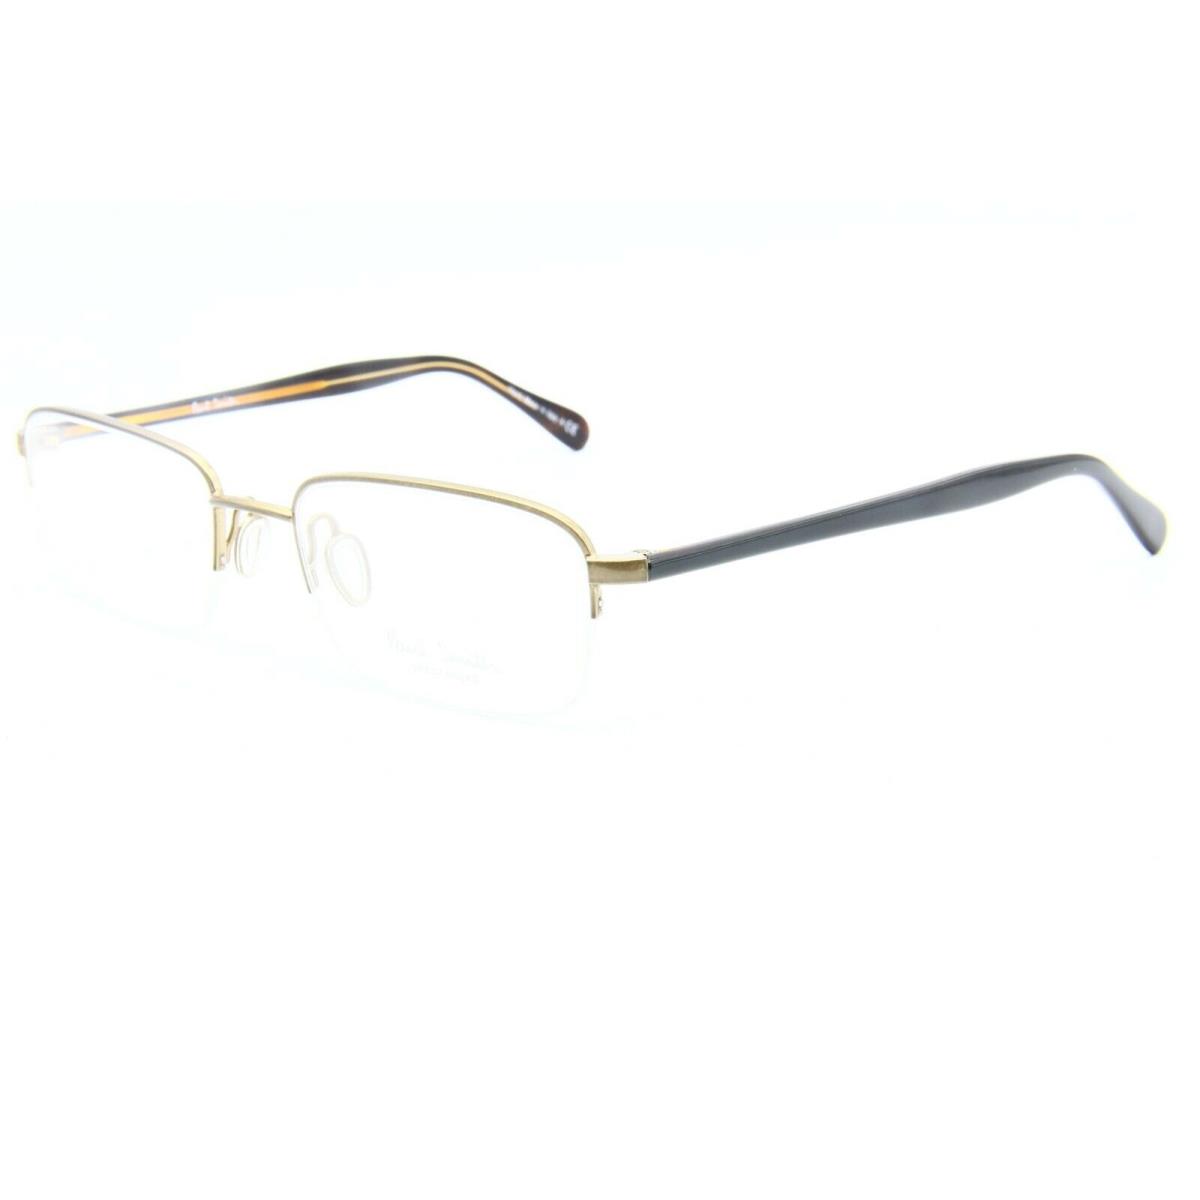 Paul Smith PM 4027 5002 Gold Eyeglasses Frame RX 51-19